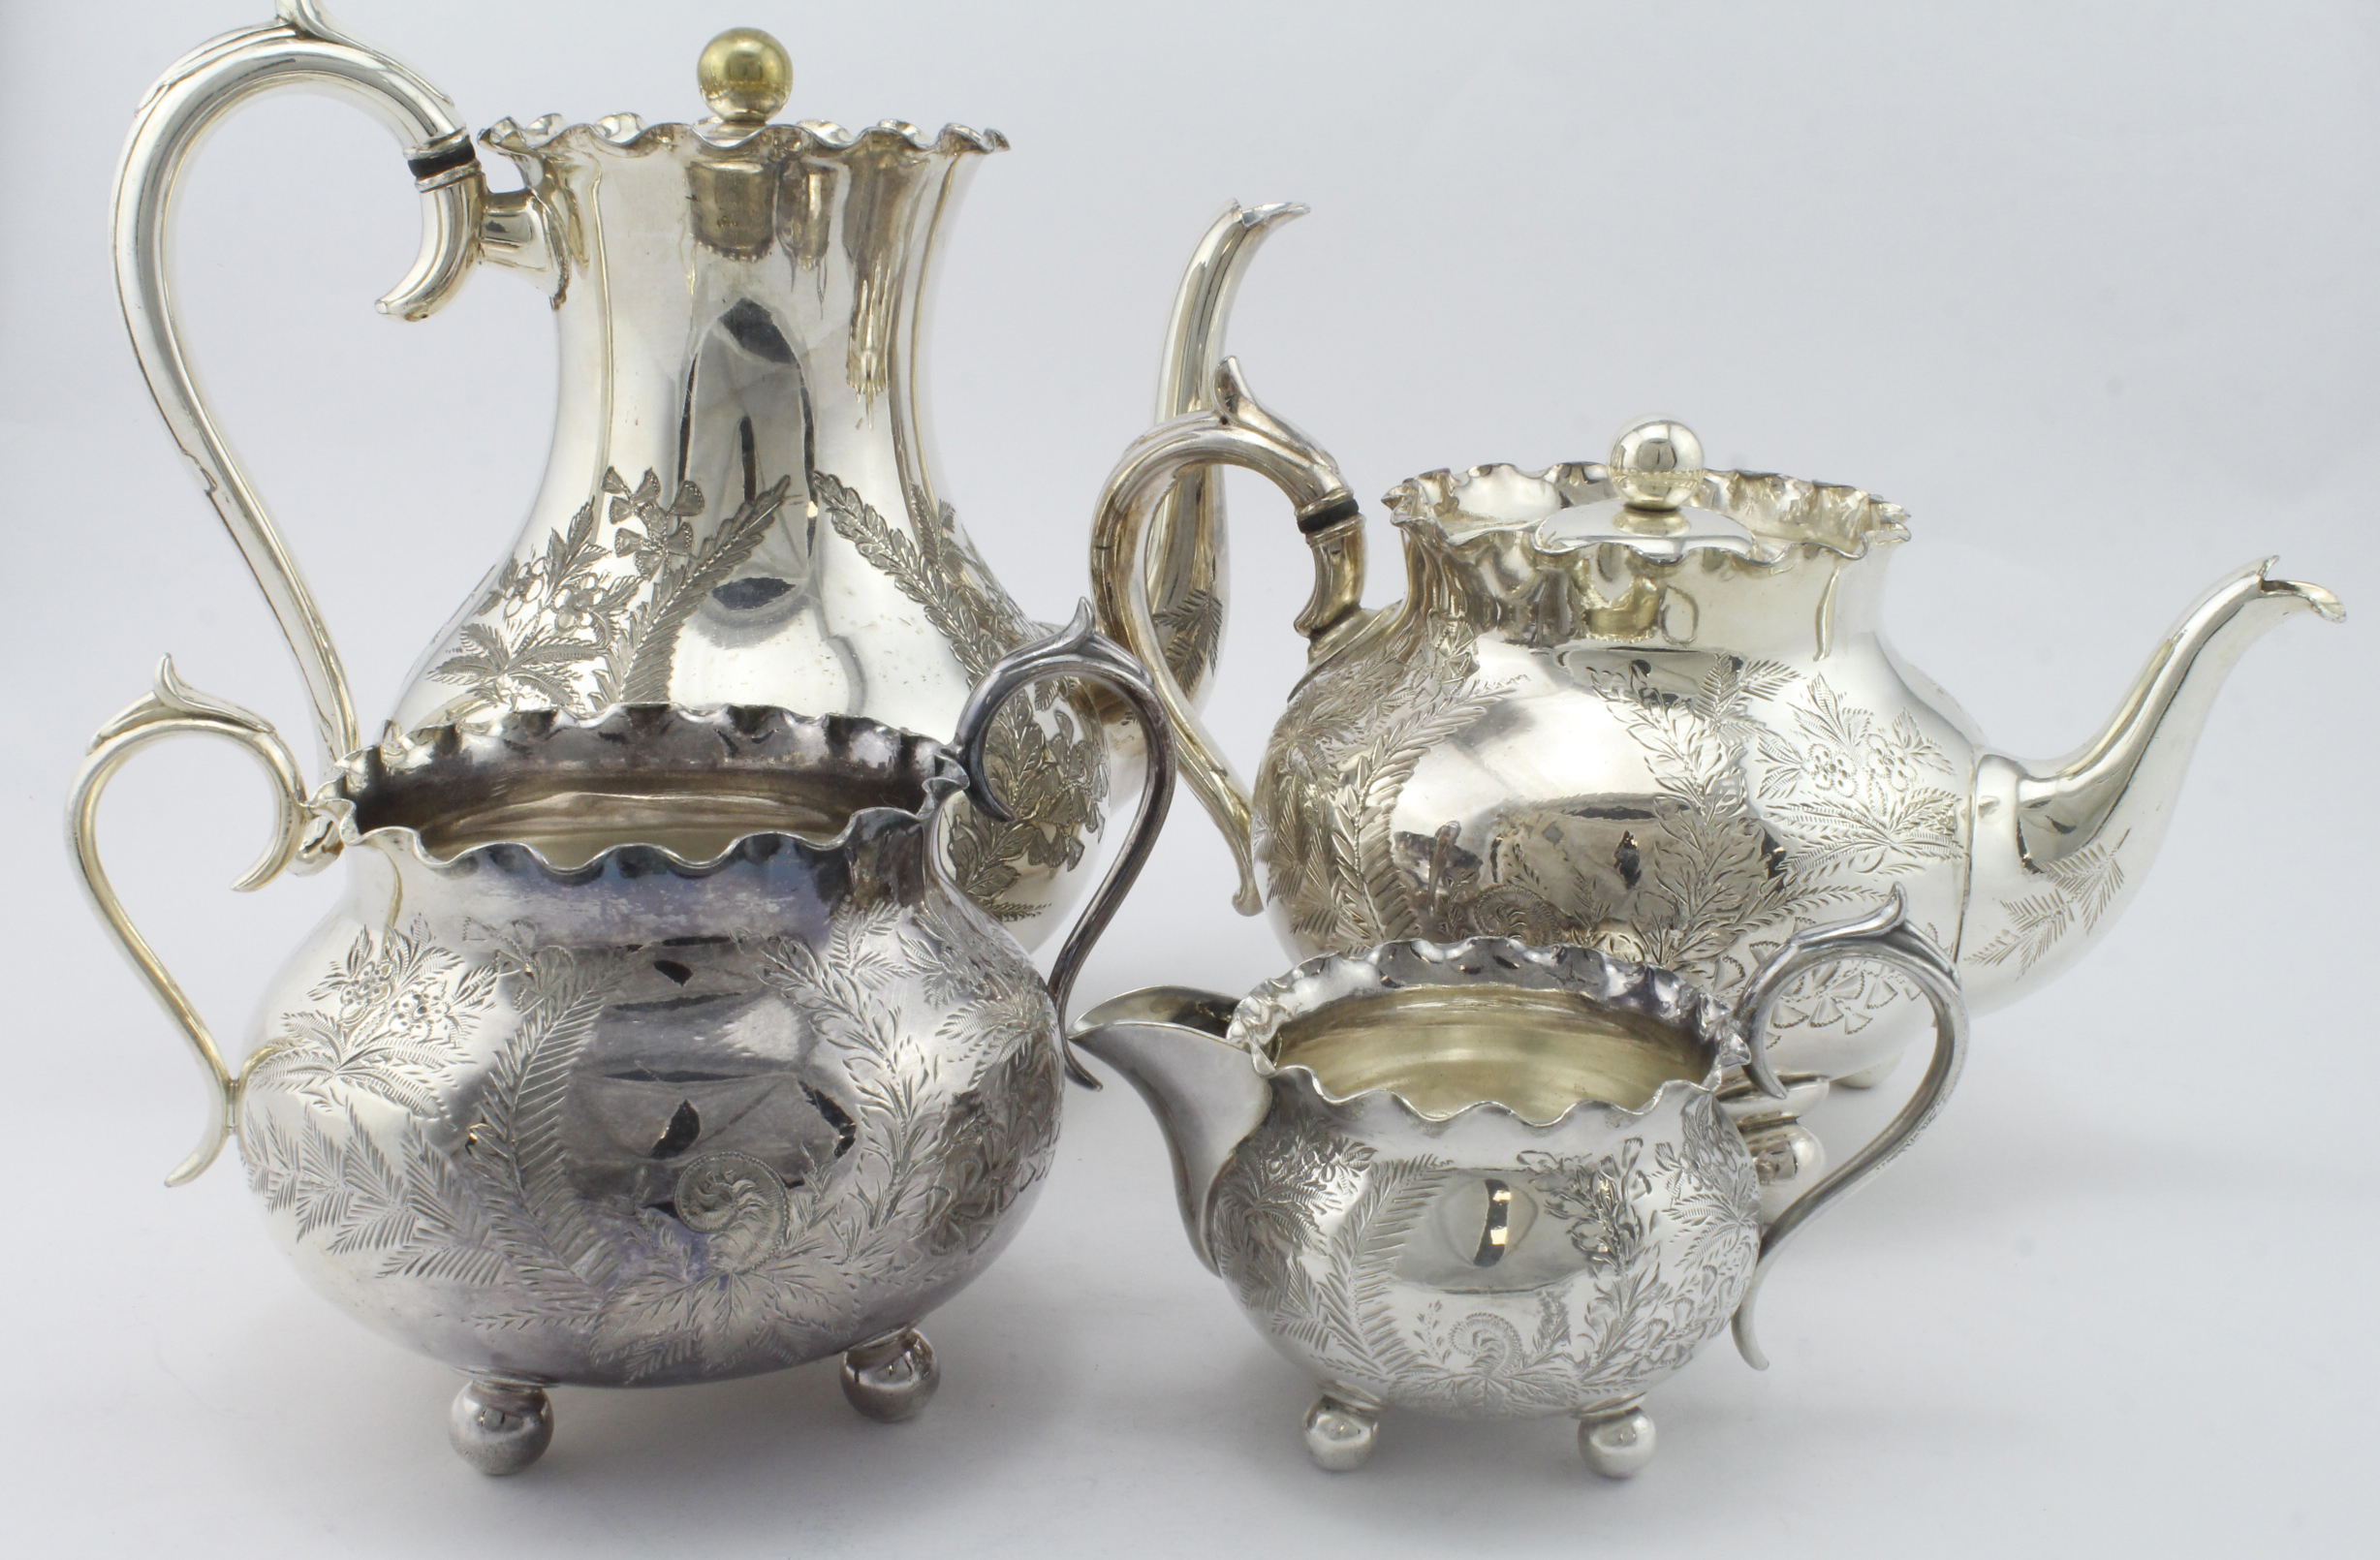 Four piece silver plated Victorian teaset comprising coffee pot, tea pot, sugar basin & cream jug by